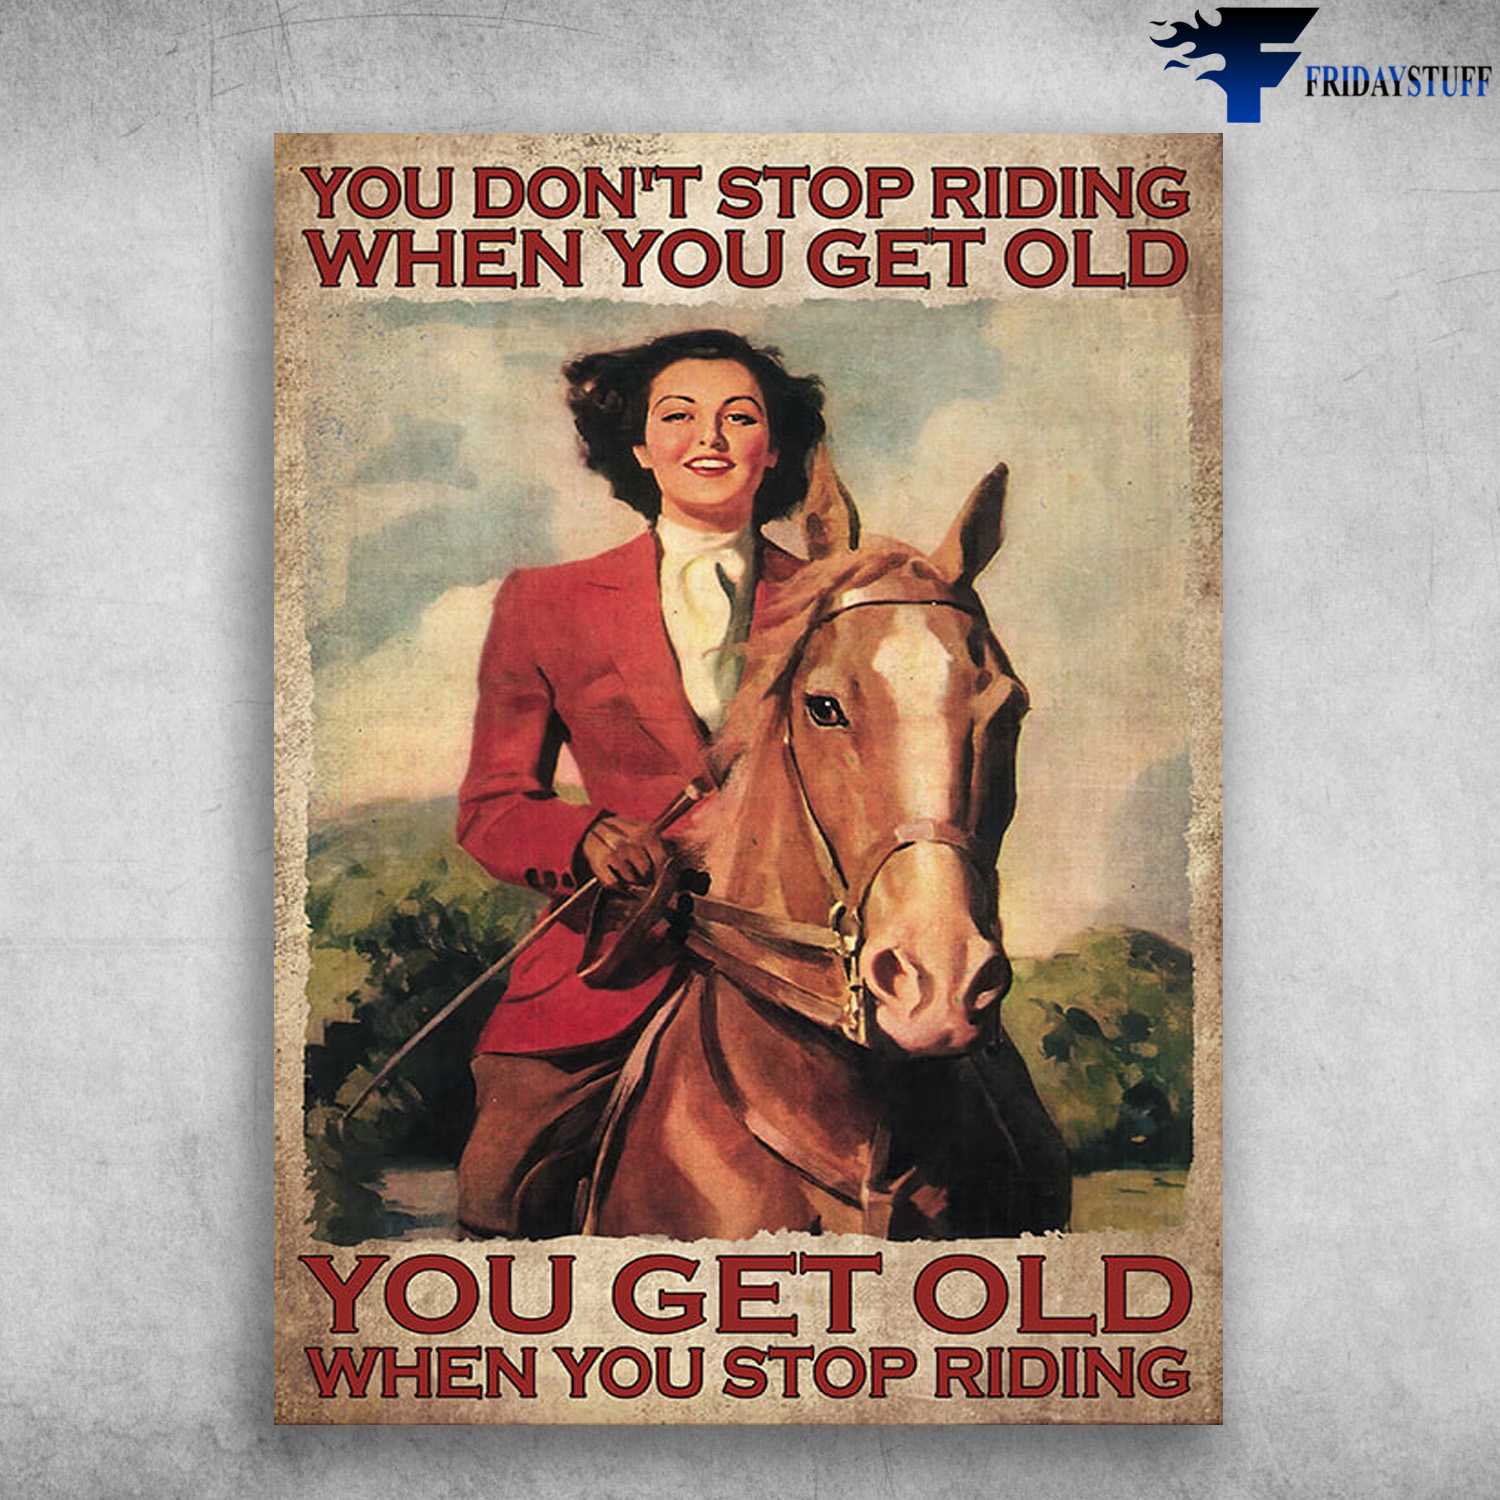 Girl Rides Horse, Horse Riding Poster, You Don't Stop Riding When You Get Old, You Get Old When You Stop Riding